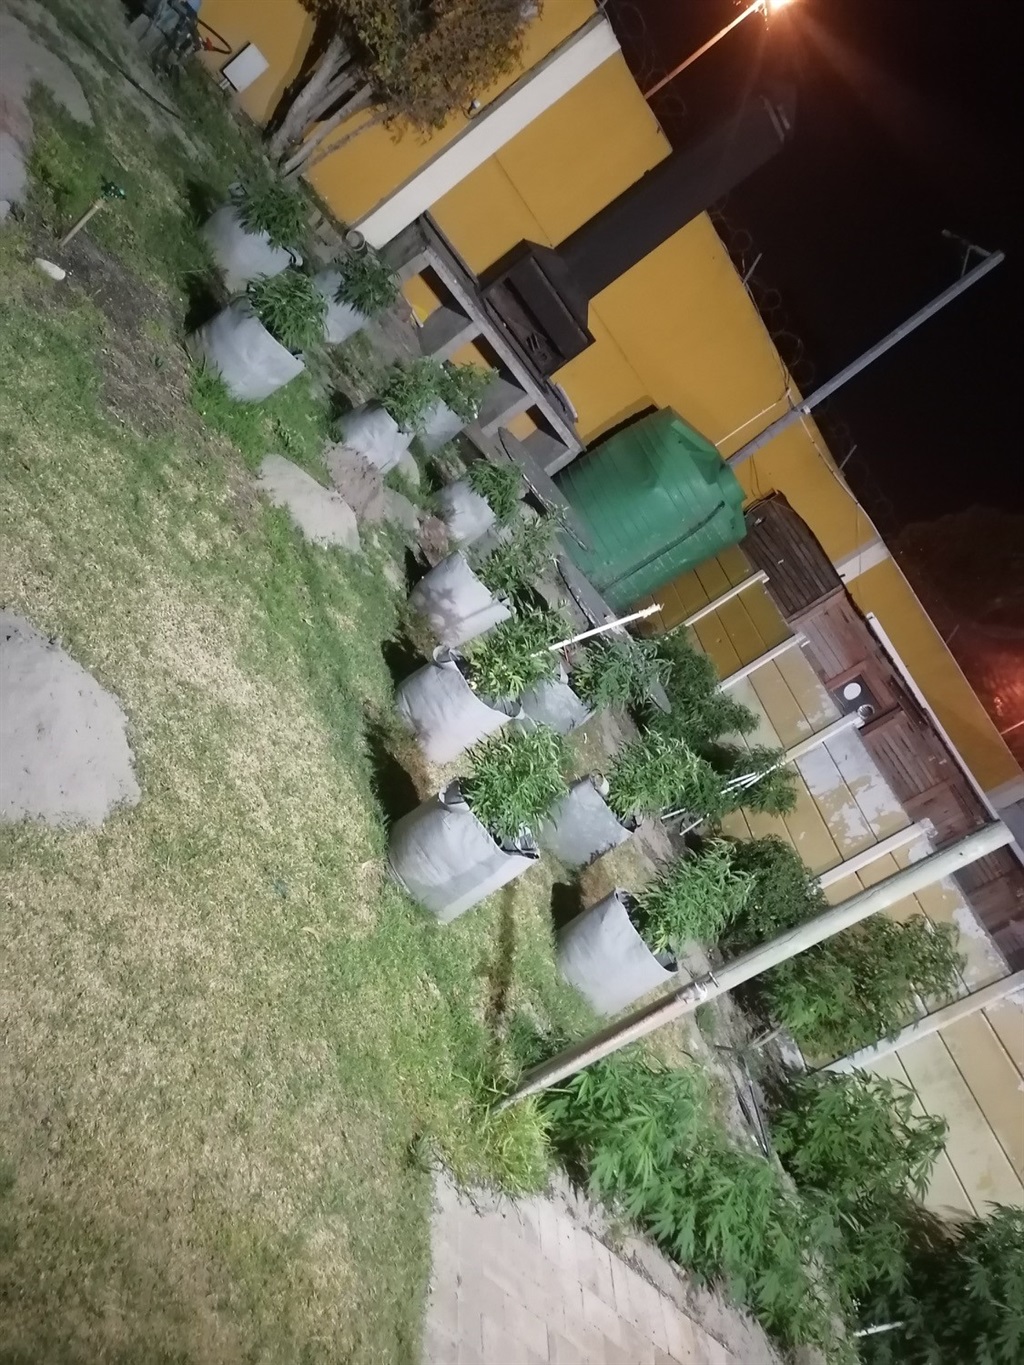 Potted marijuana plants growing in makeshift plant